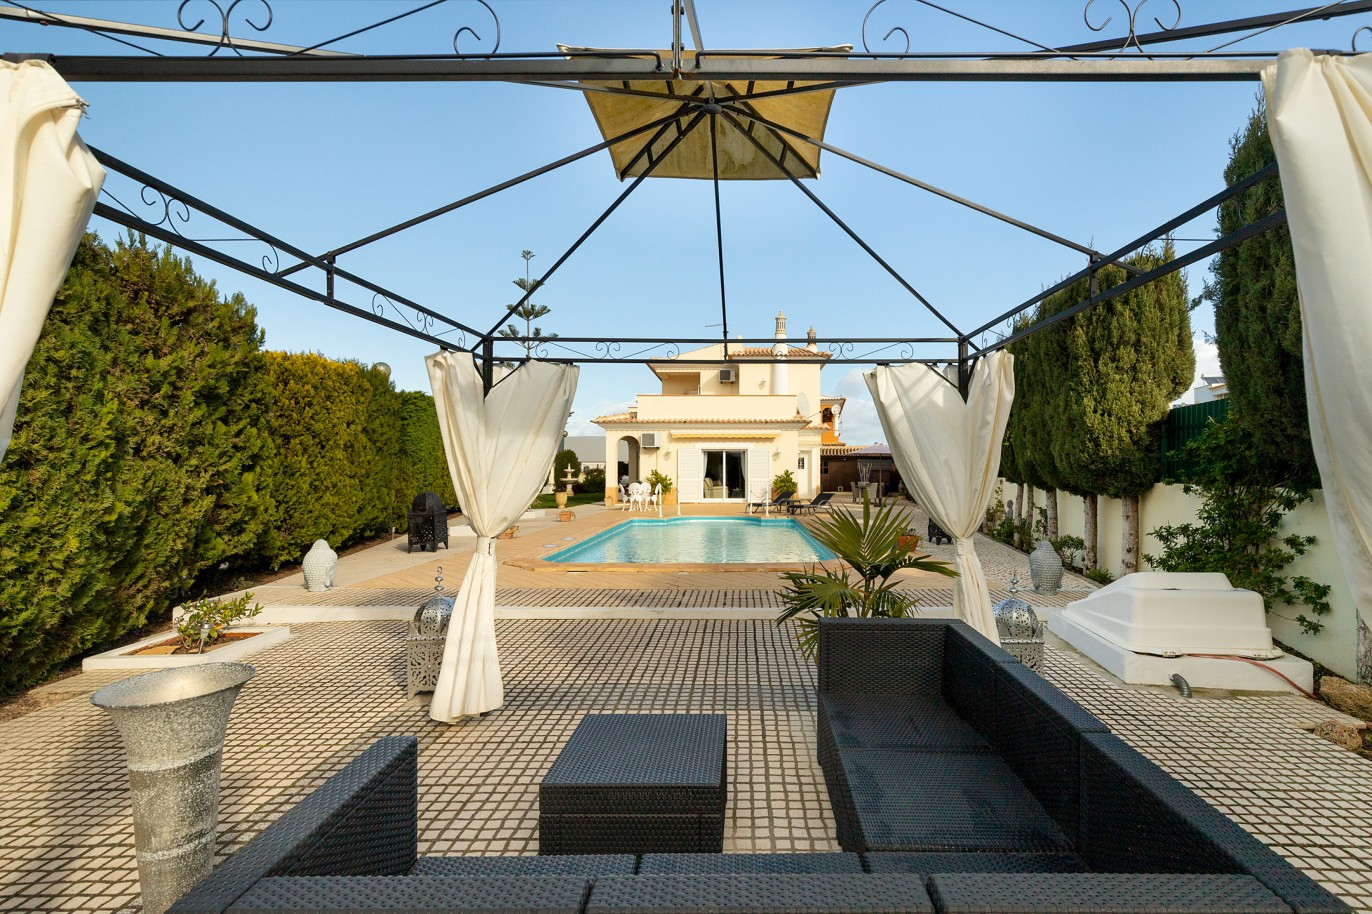 Fantastic 3 bedroom villa with pool, for sale in Algoz, Algarve_215672